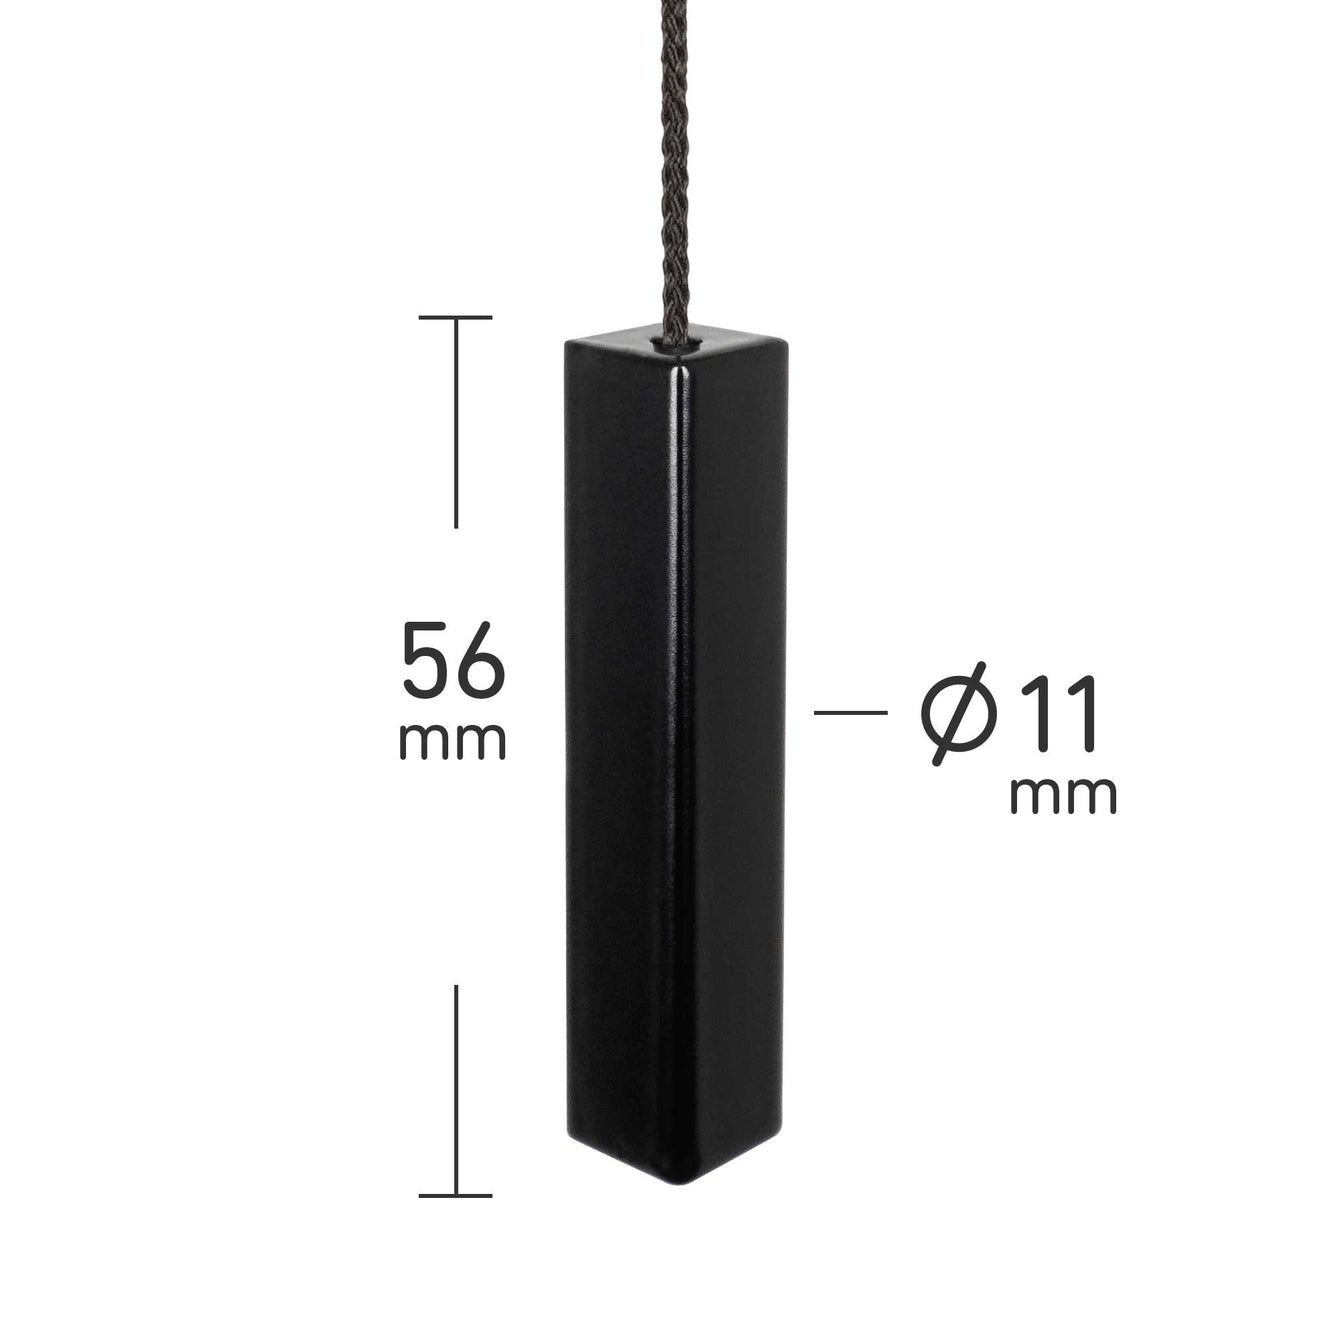 ElekTek Premium Matt Black Bathroom Light Pull Cord Switch Kit with Pull Chain Handle 